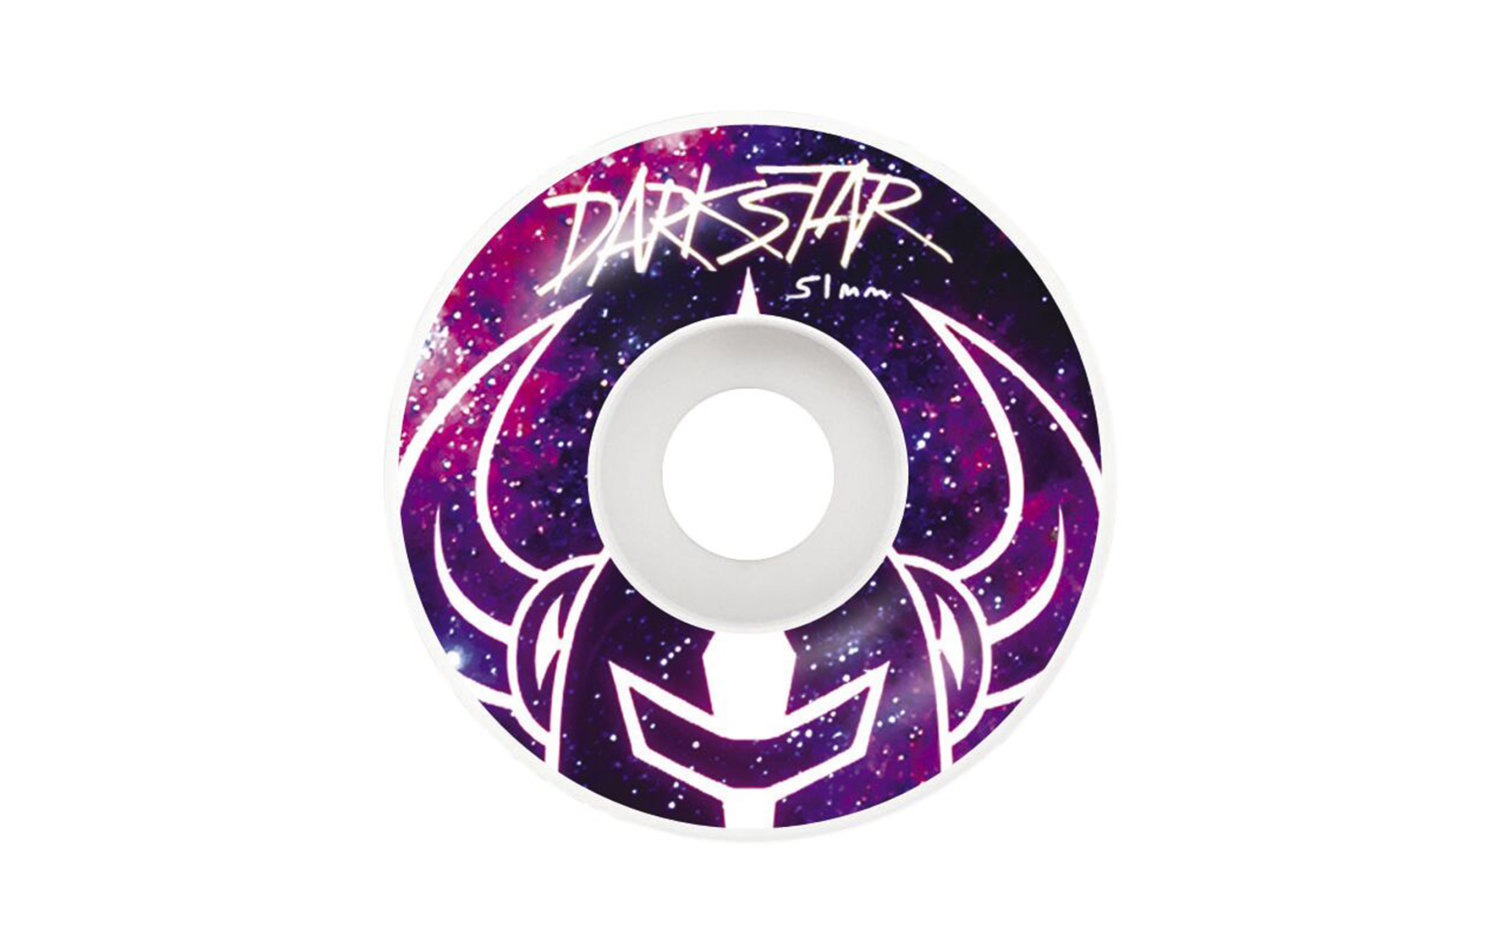 Darkstar Mystic Wheels 51mm (10112311)